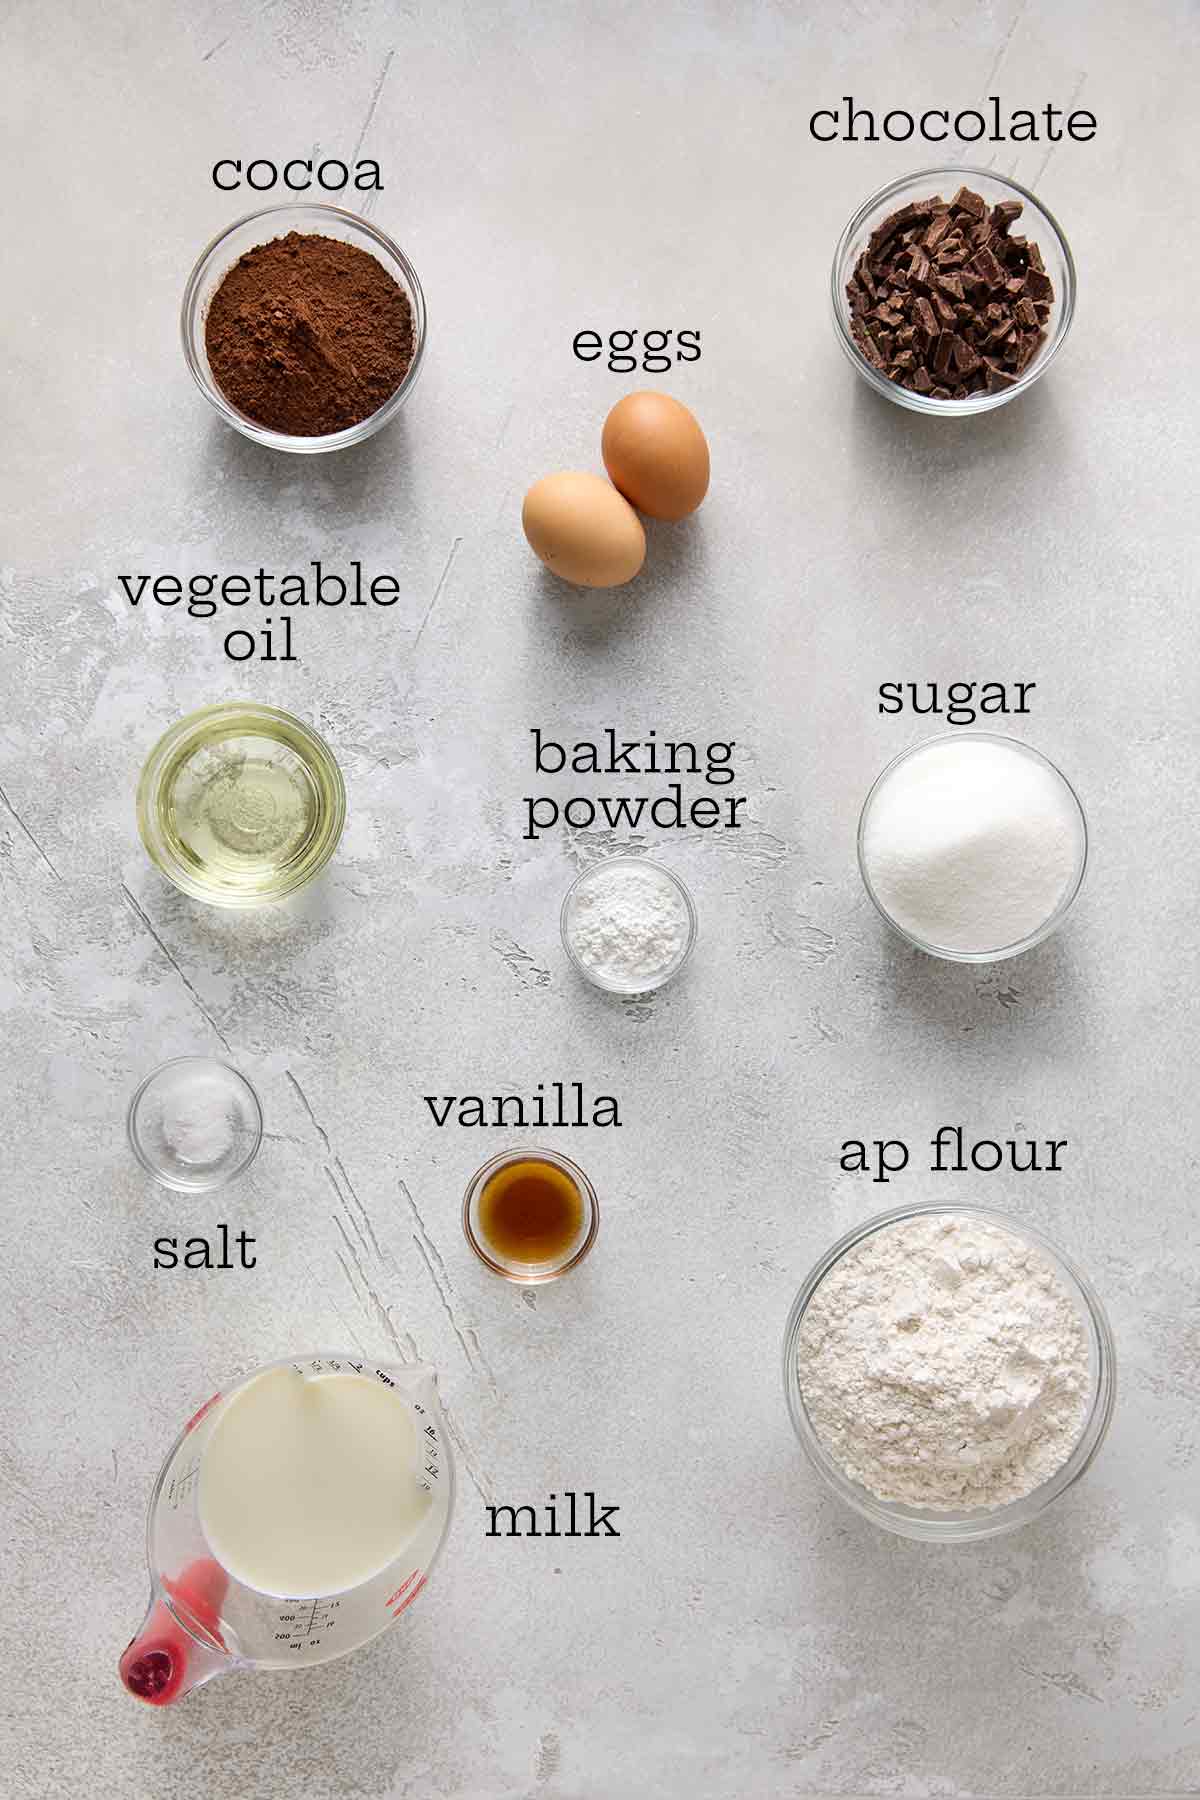 Ingredients for chocolate muffins--cocoa, chocolate, eggs, oil, baking powder, sugar, flour, vanilla, salt, and milk.